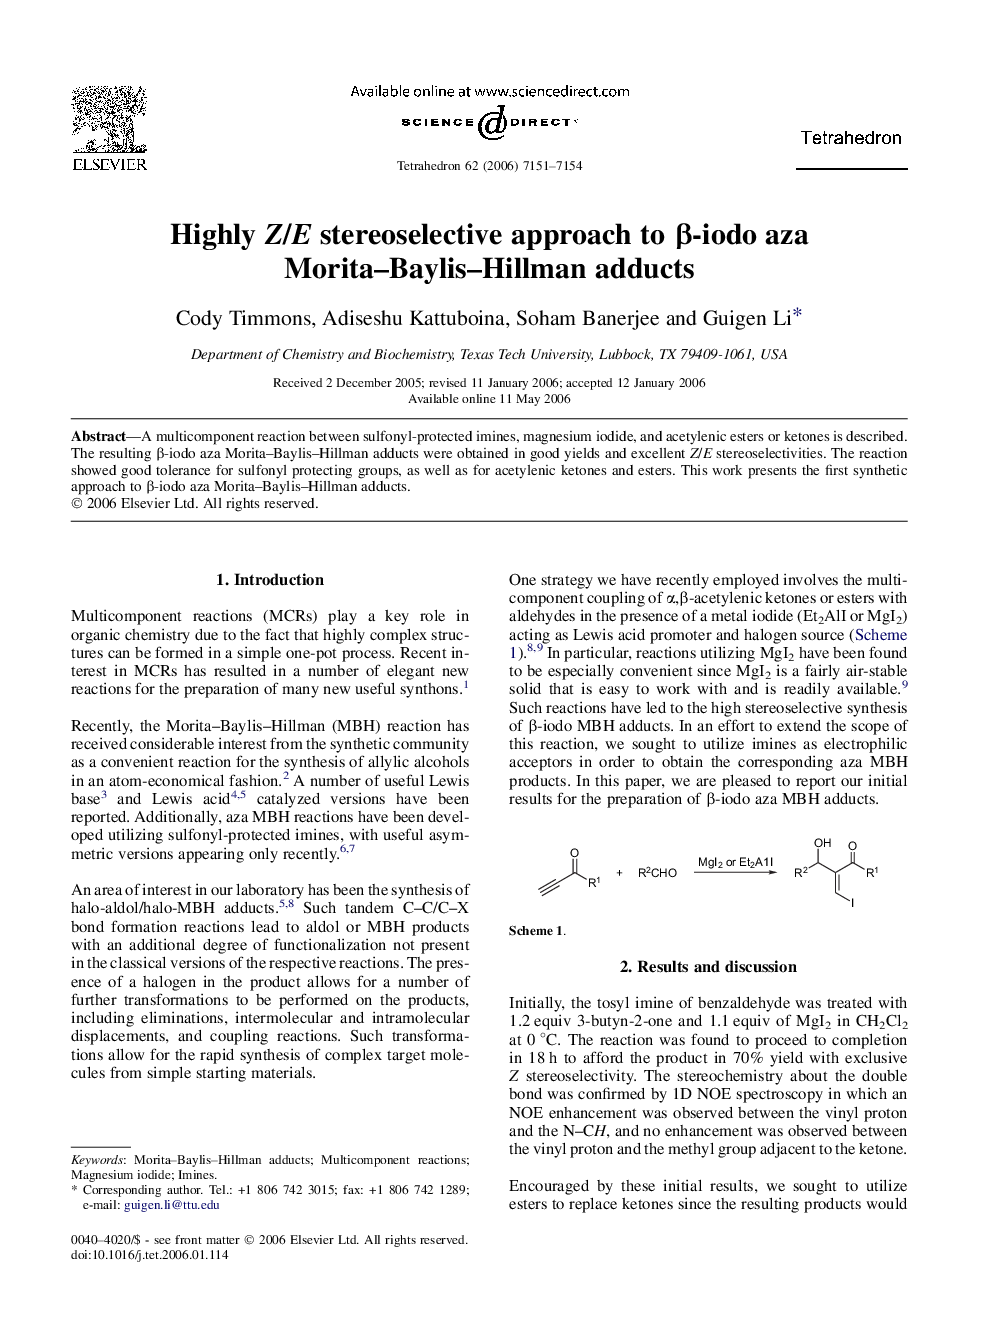 Highly Z/E stereoselective approach to Î²-iodo aza Morita-Baylis-Hillman adducts